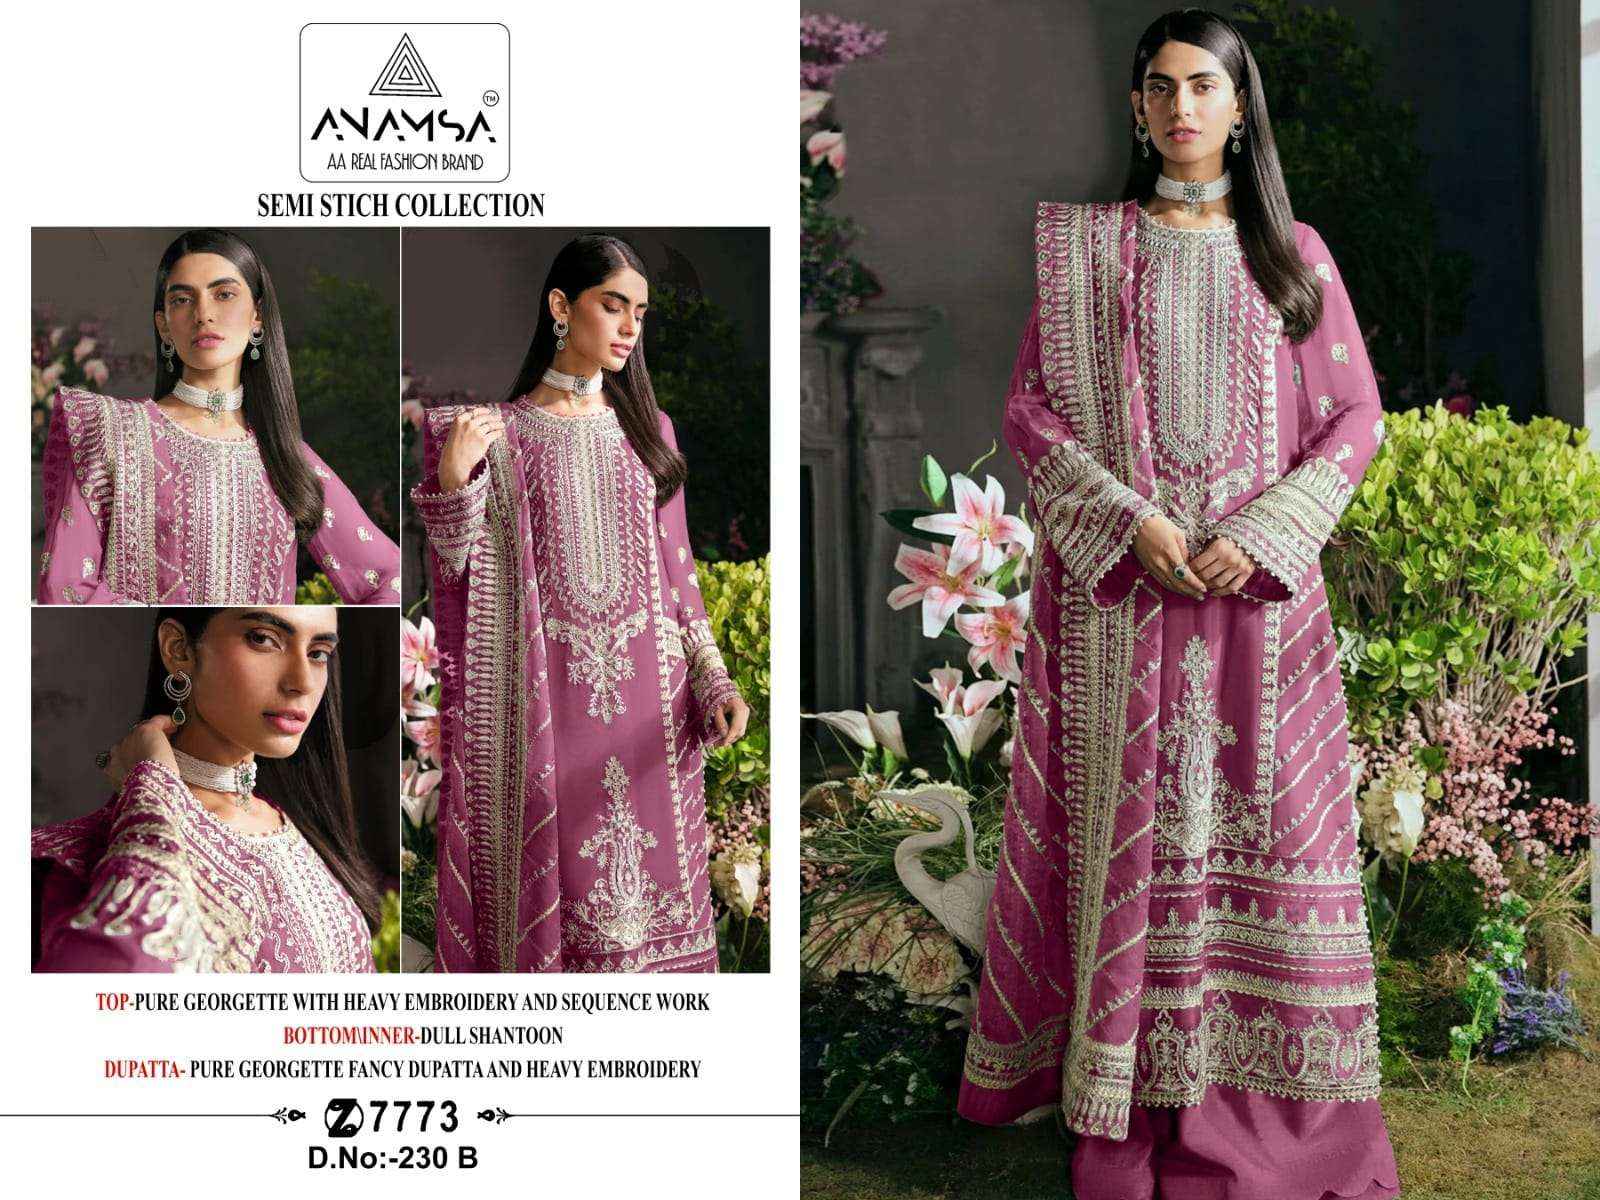 Anamsa D No 230 Georgette Dress Material 4 pcs Catalogue